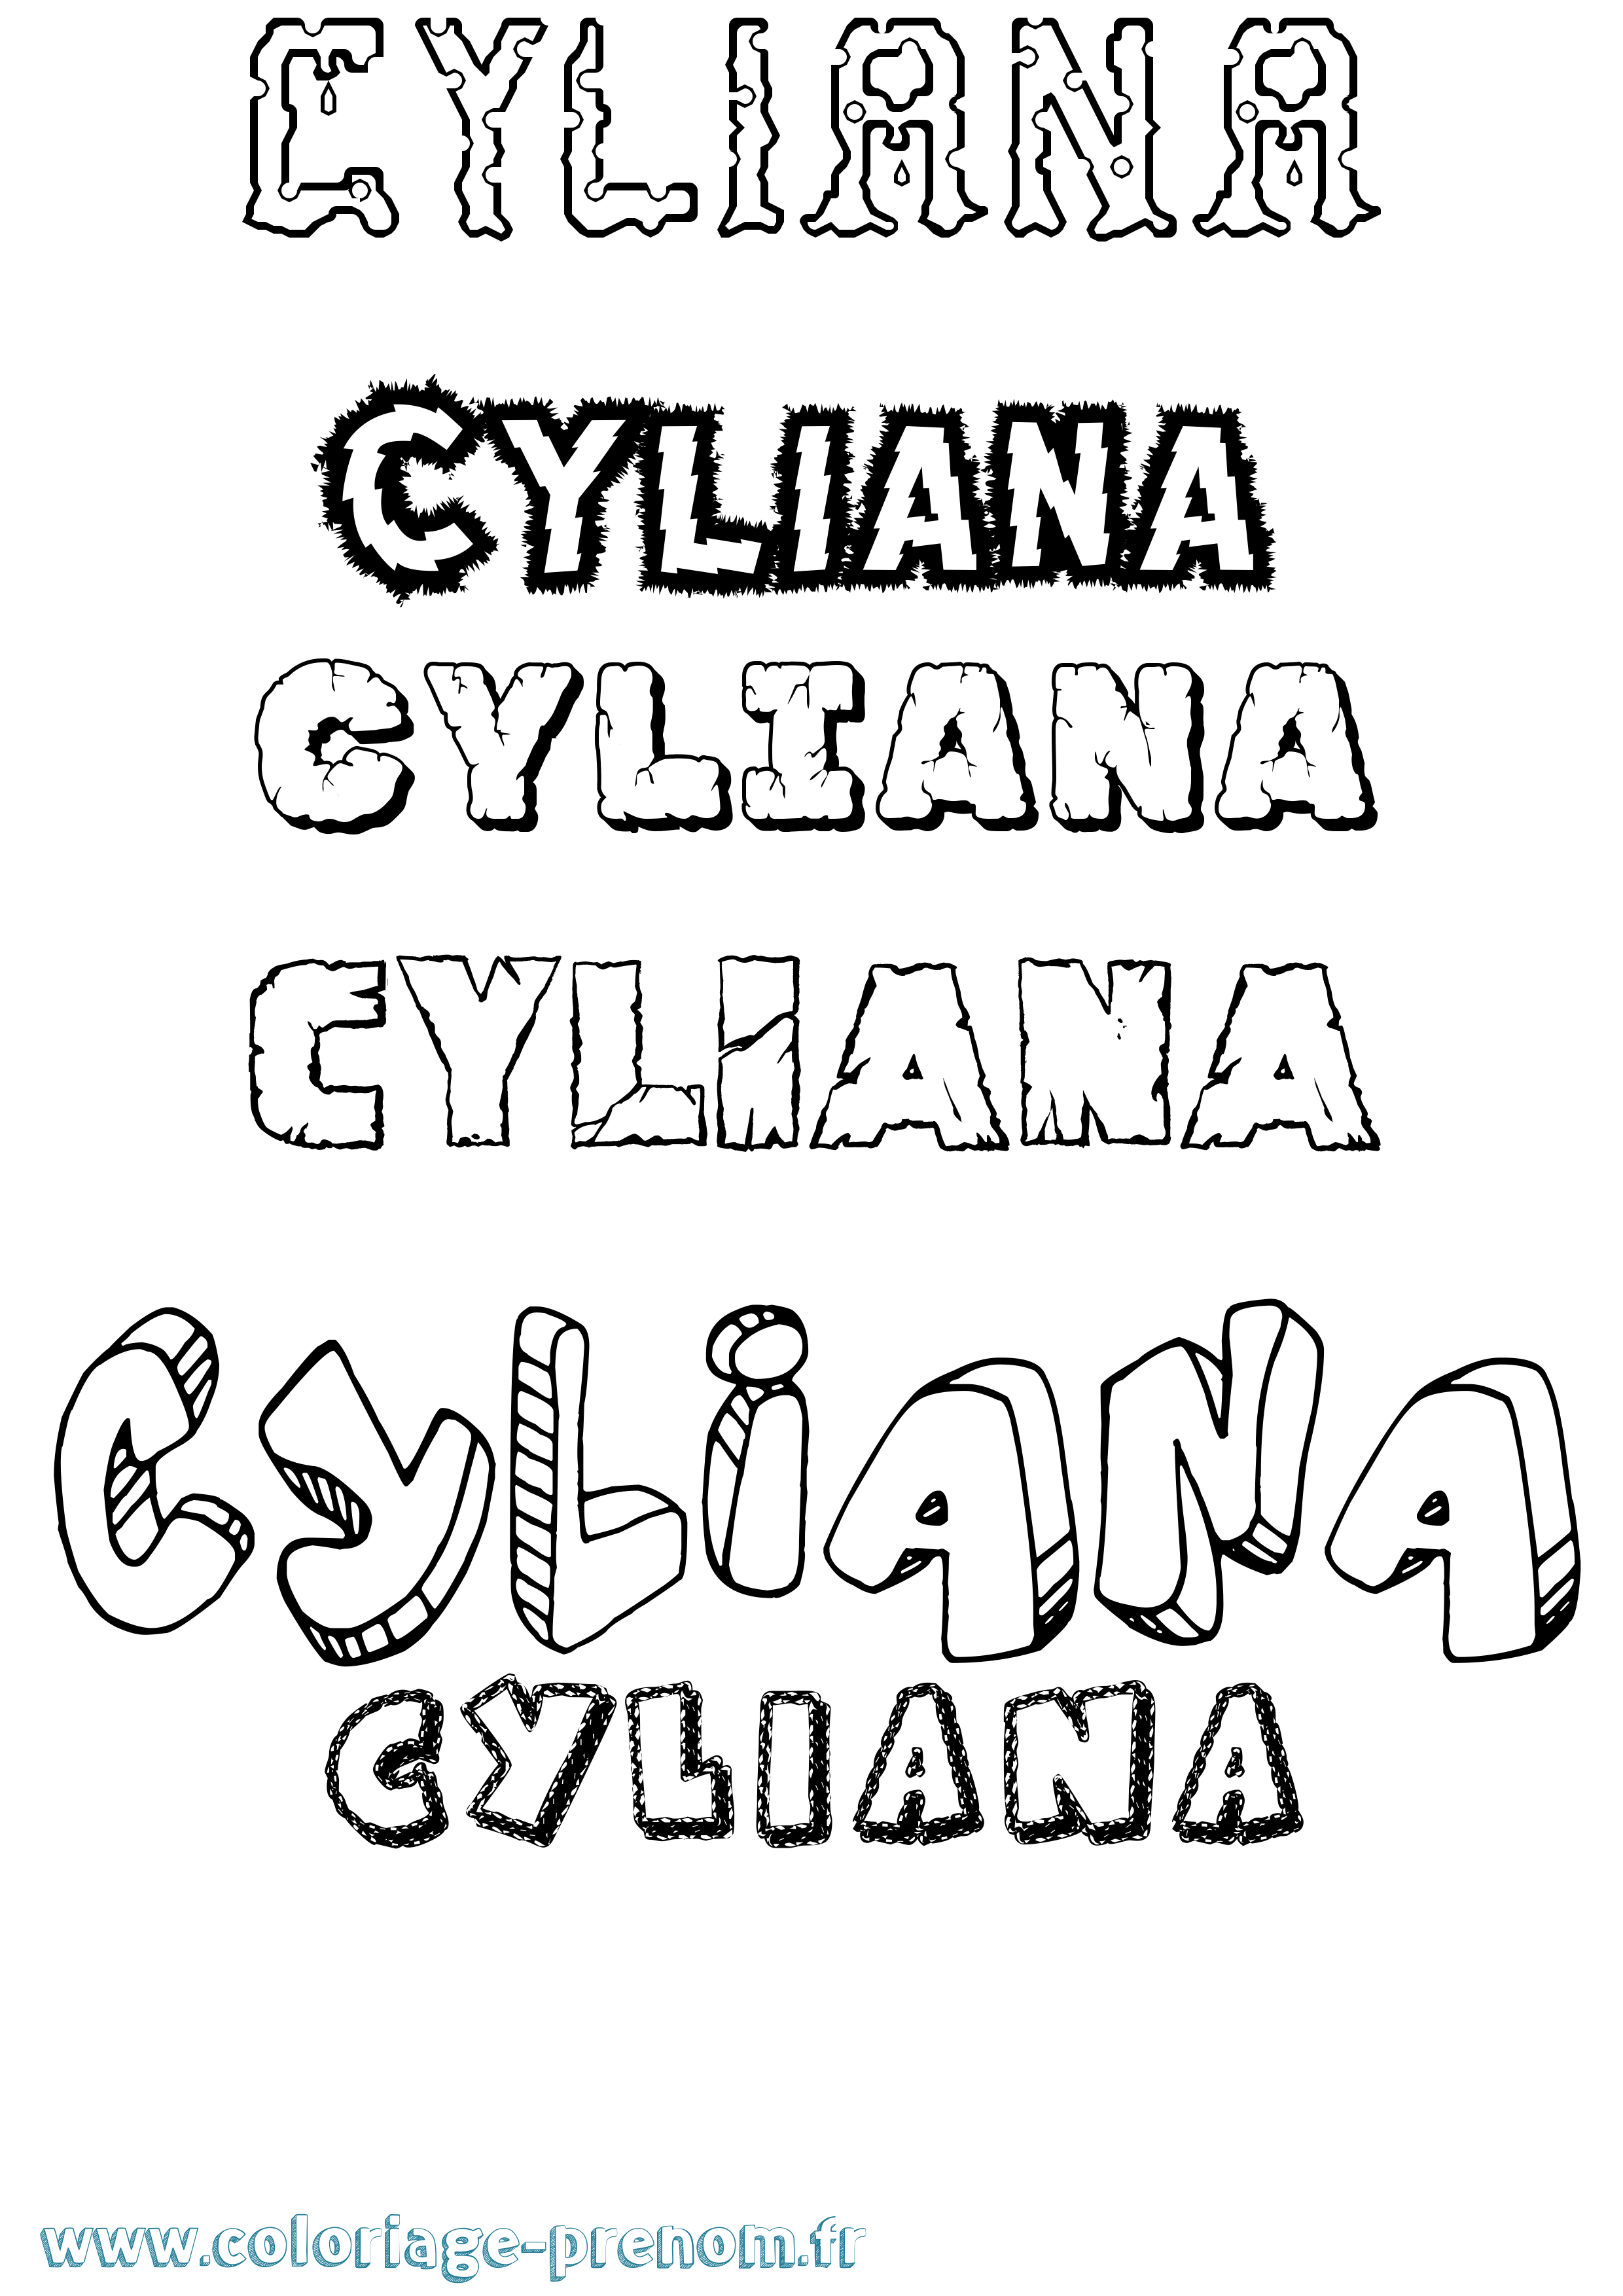 Coloriage prénom Cyliana Destructuré